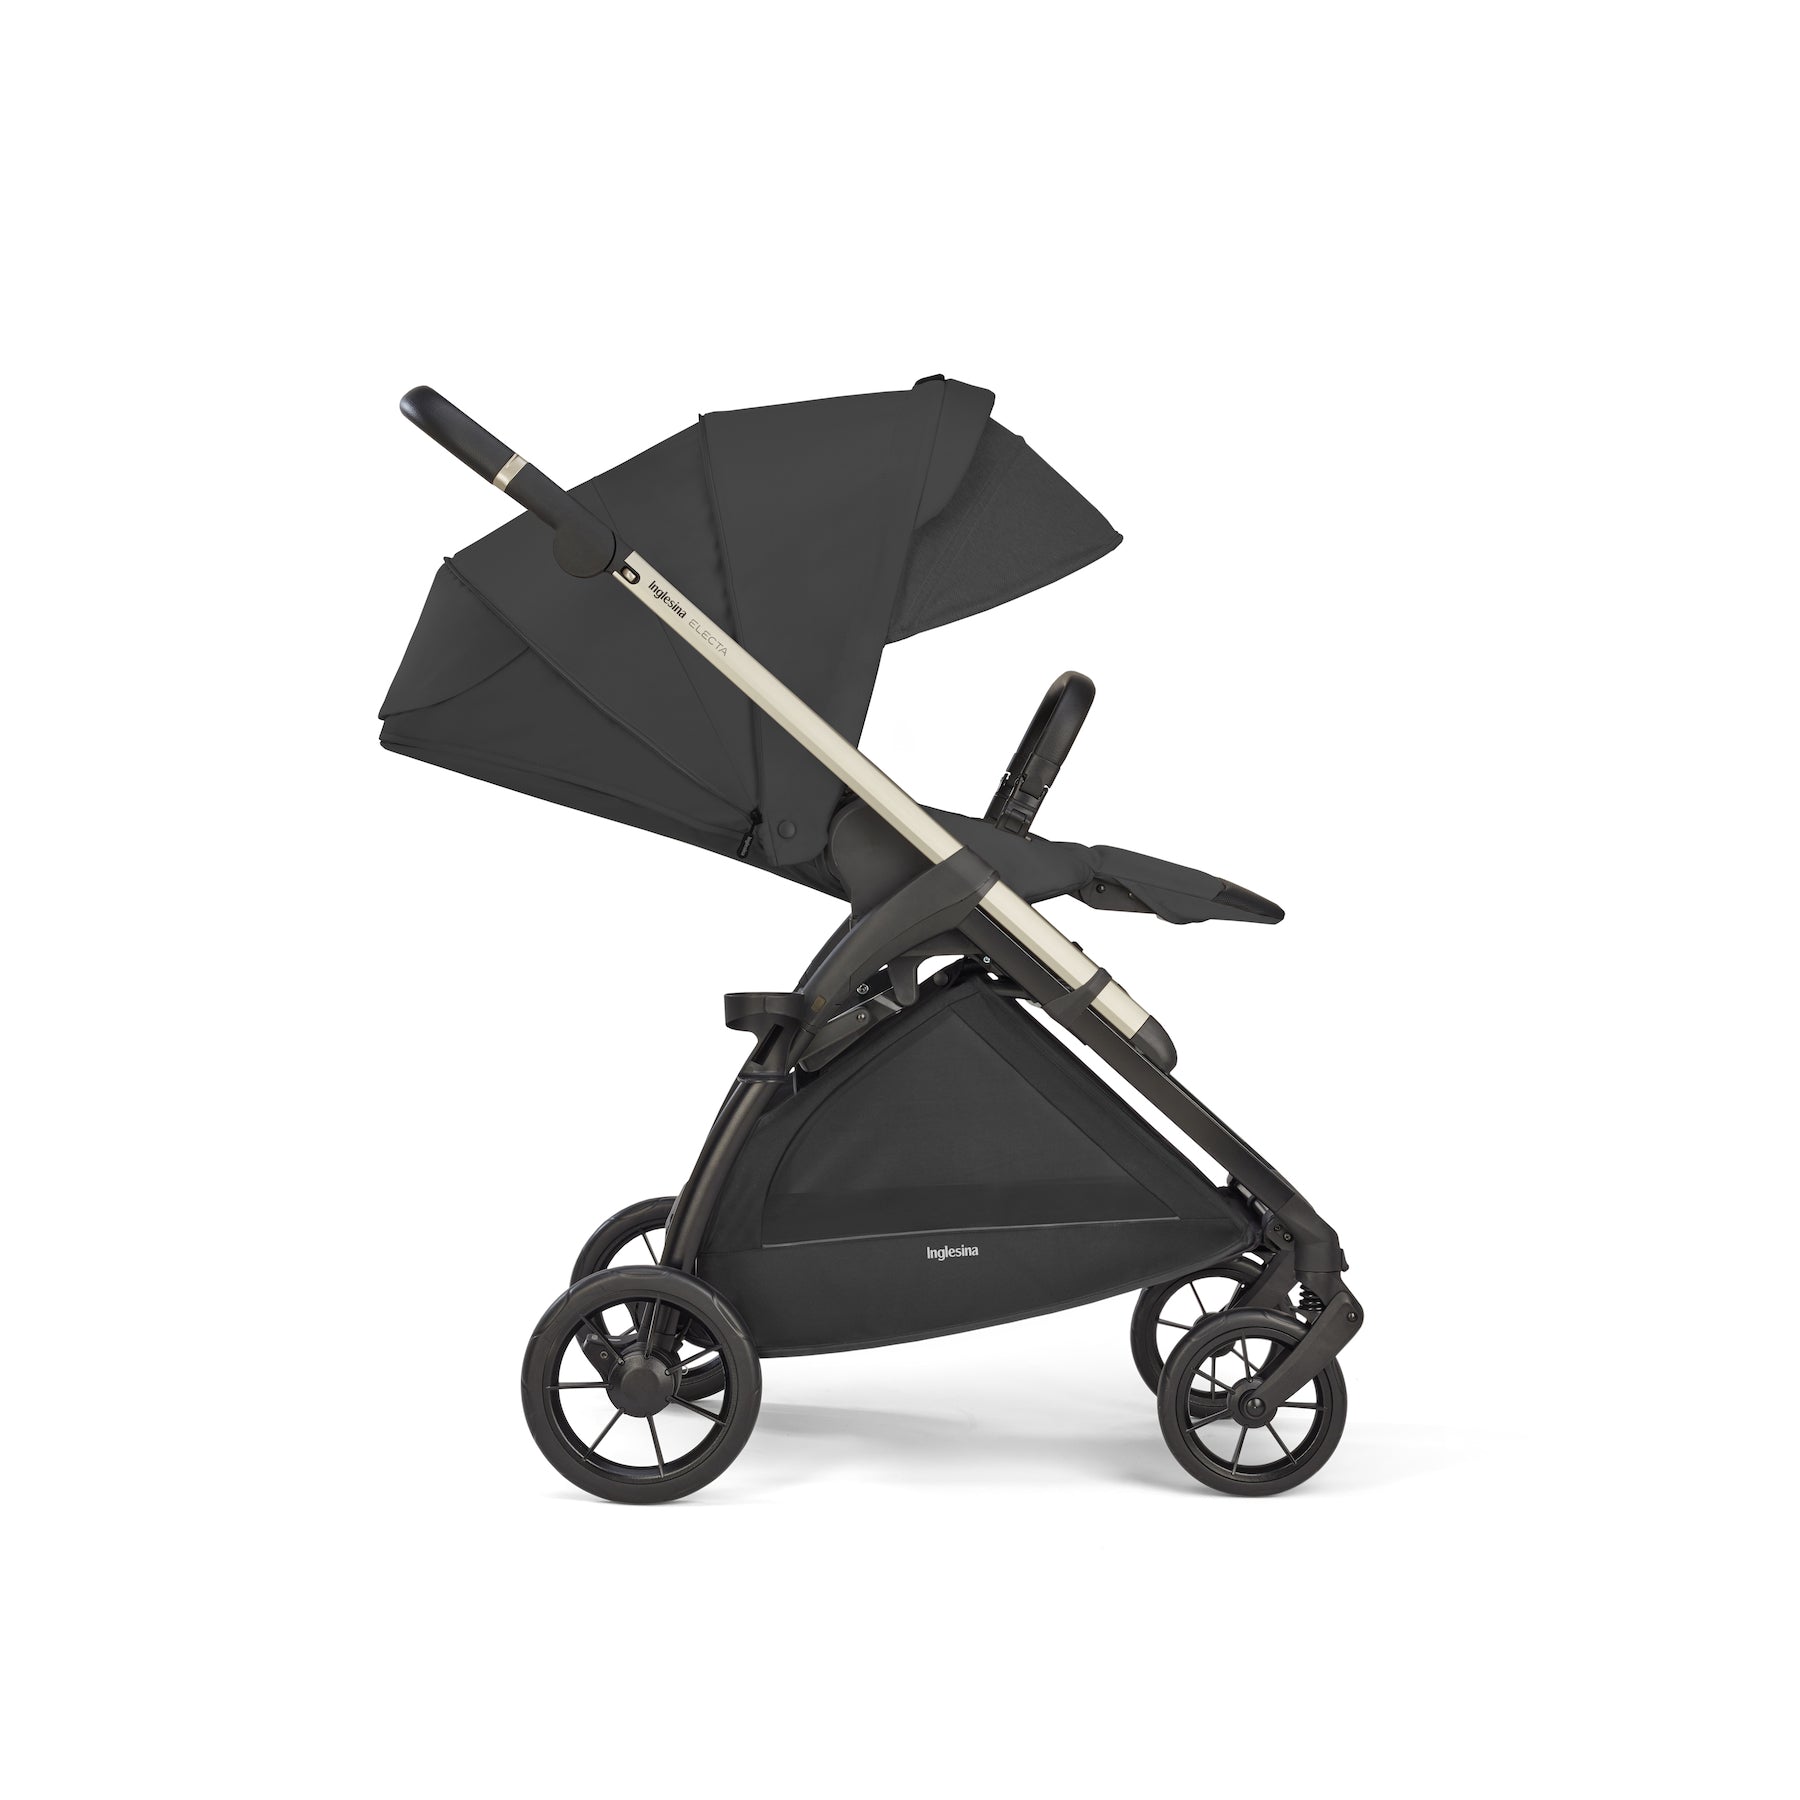 Inglesina Electa Stroller - ANB Baby -809630009038$500 - $1000